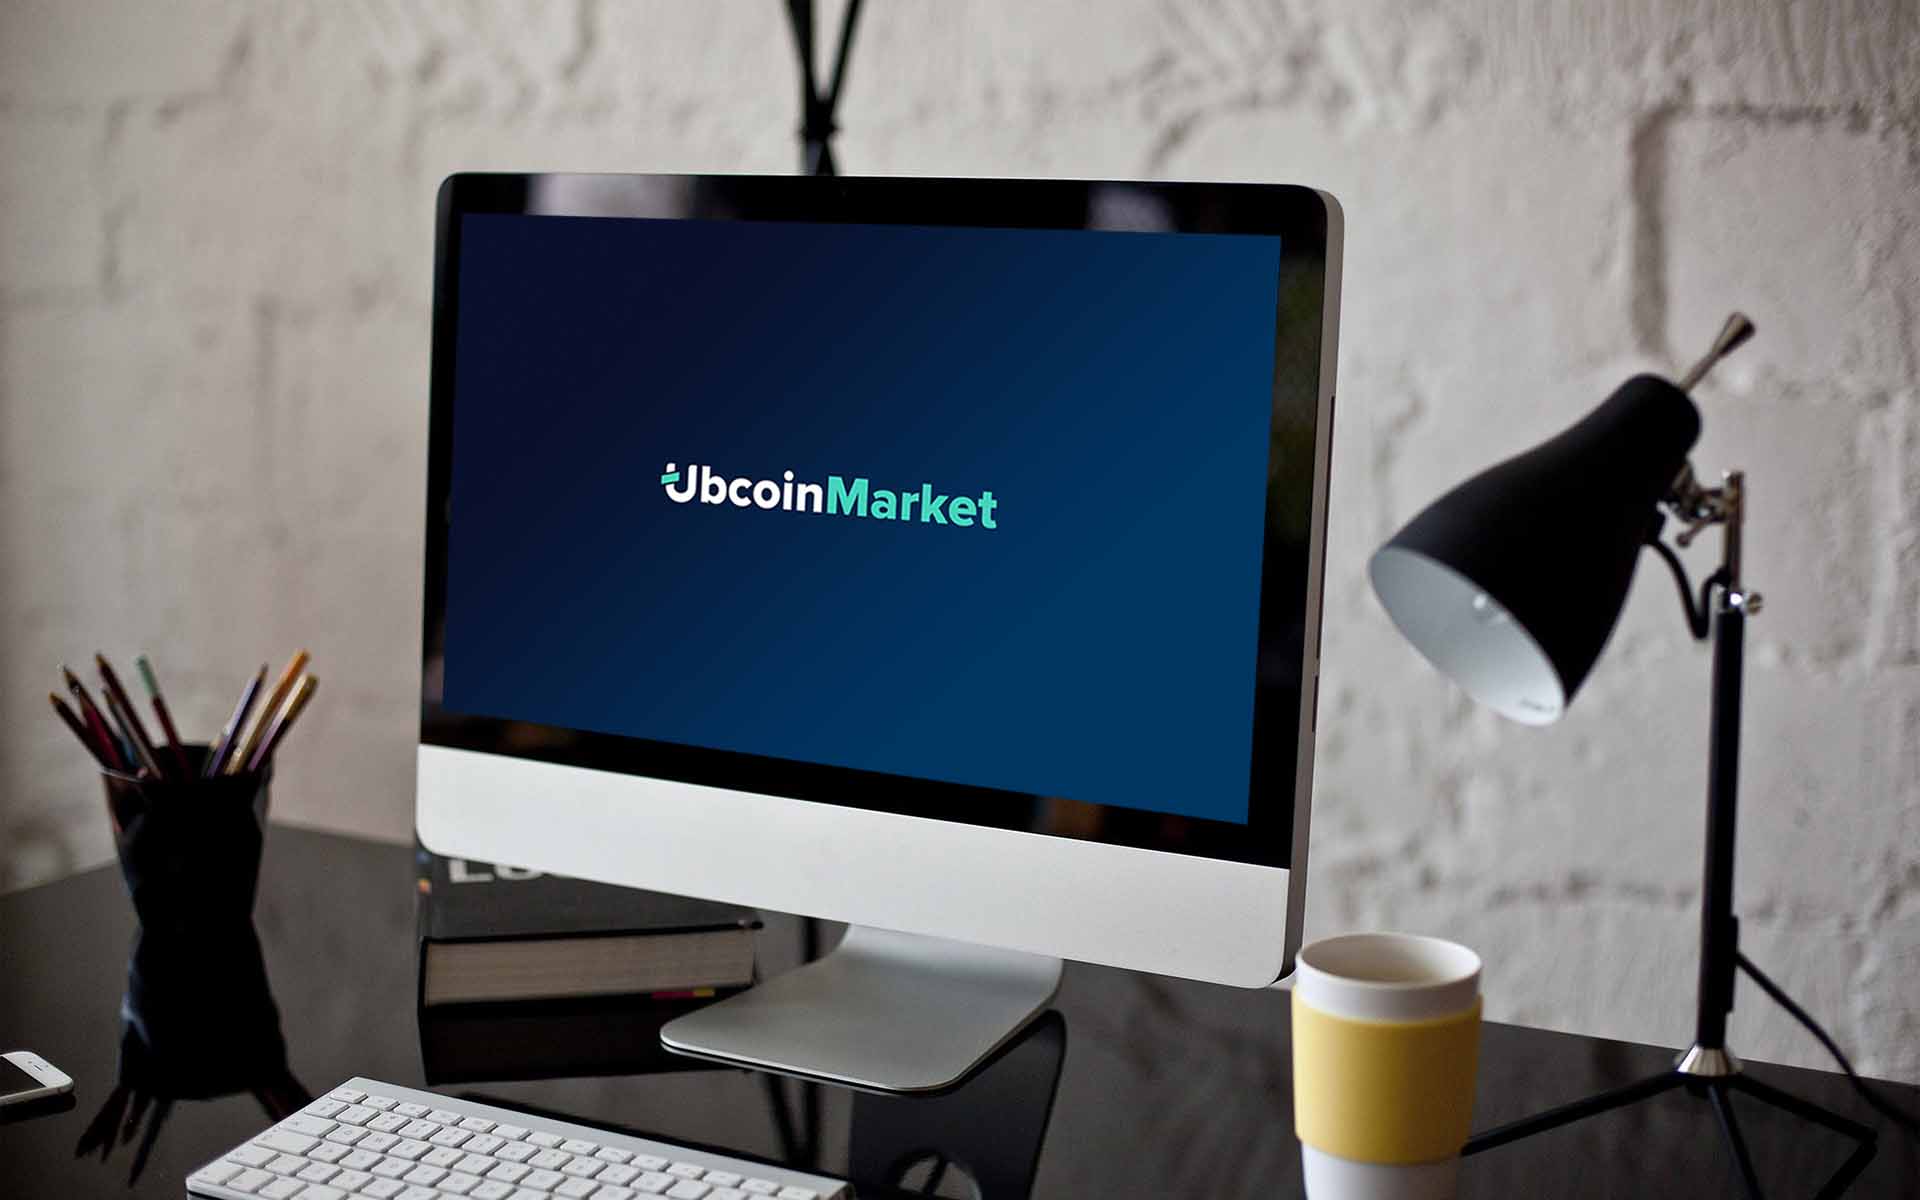 Ubcoin Founder Felix Khachatryan: Ubcoin Market a 'Hybrid Between a Marketplace and Crypto Exchange'